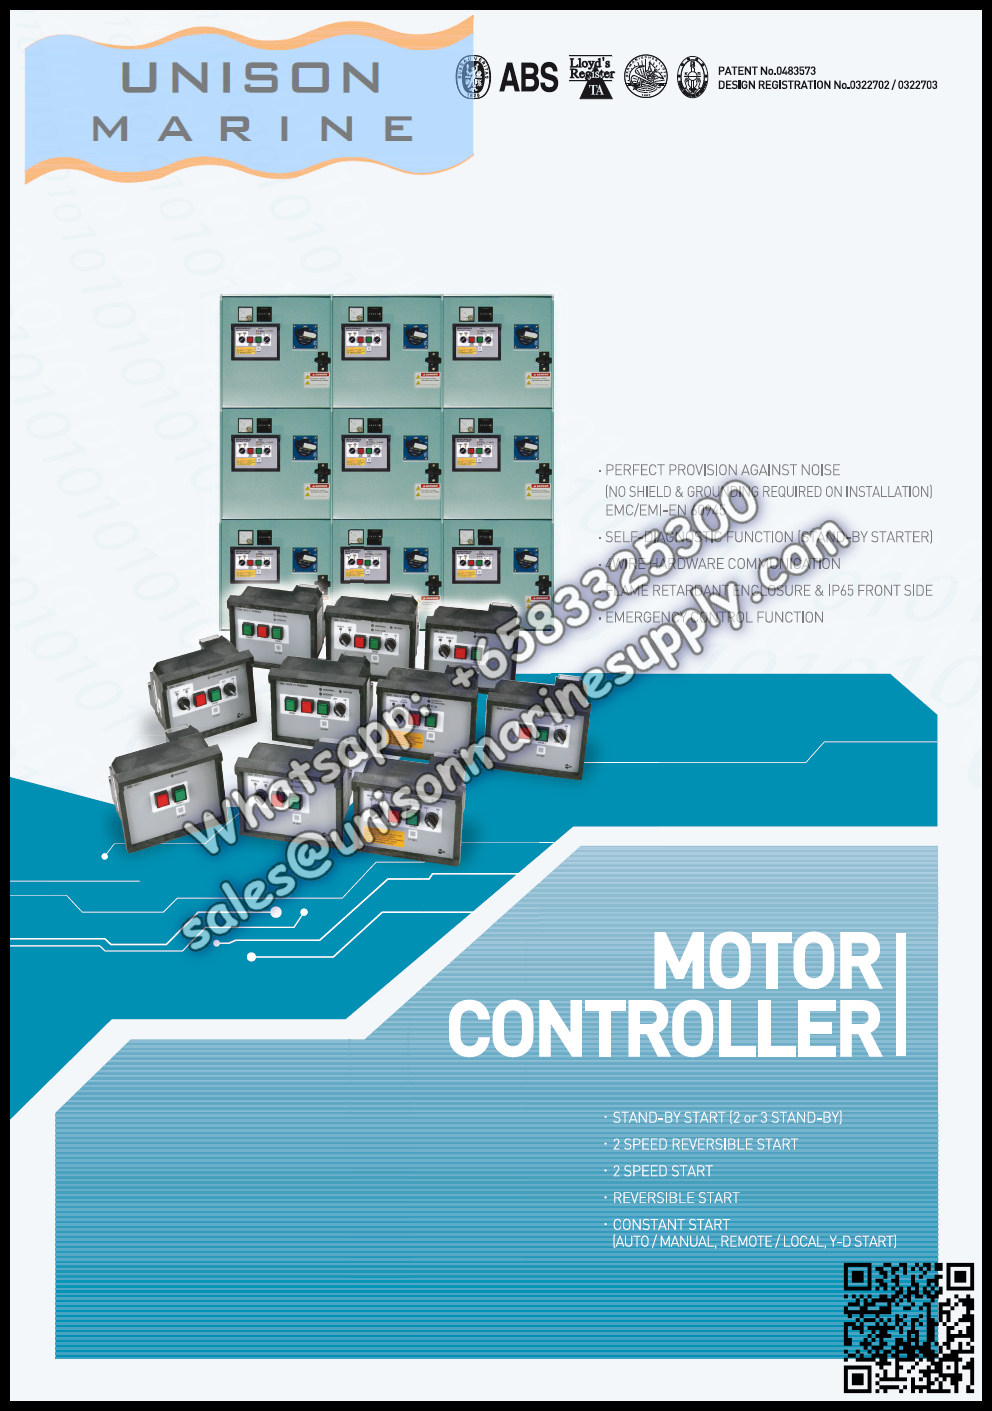 Westronics（LUXCO）Marine motor controller : SMC-505